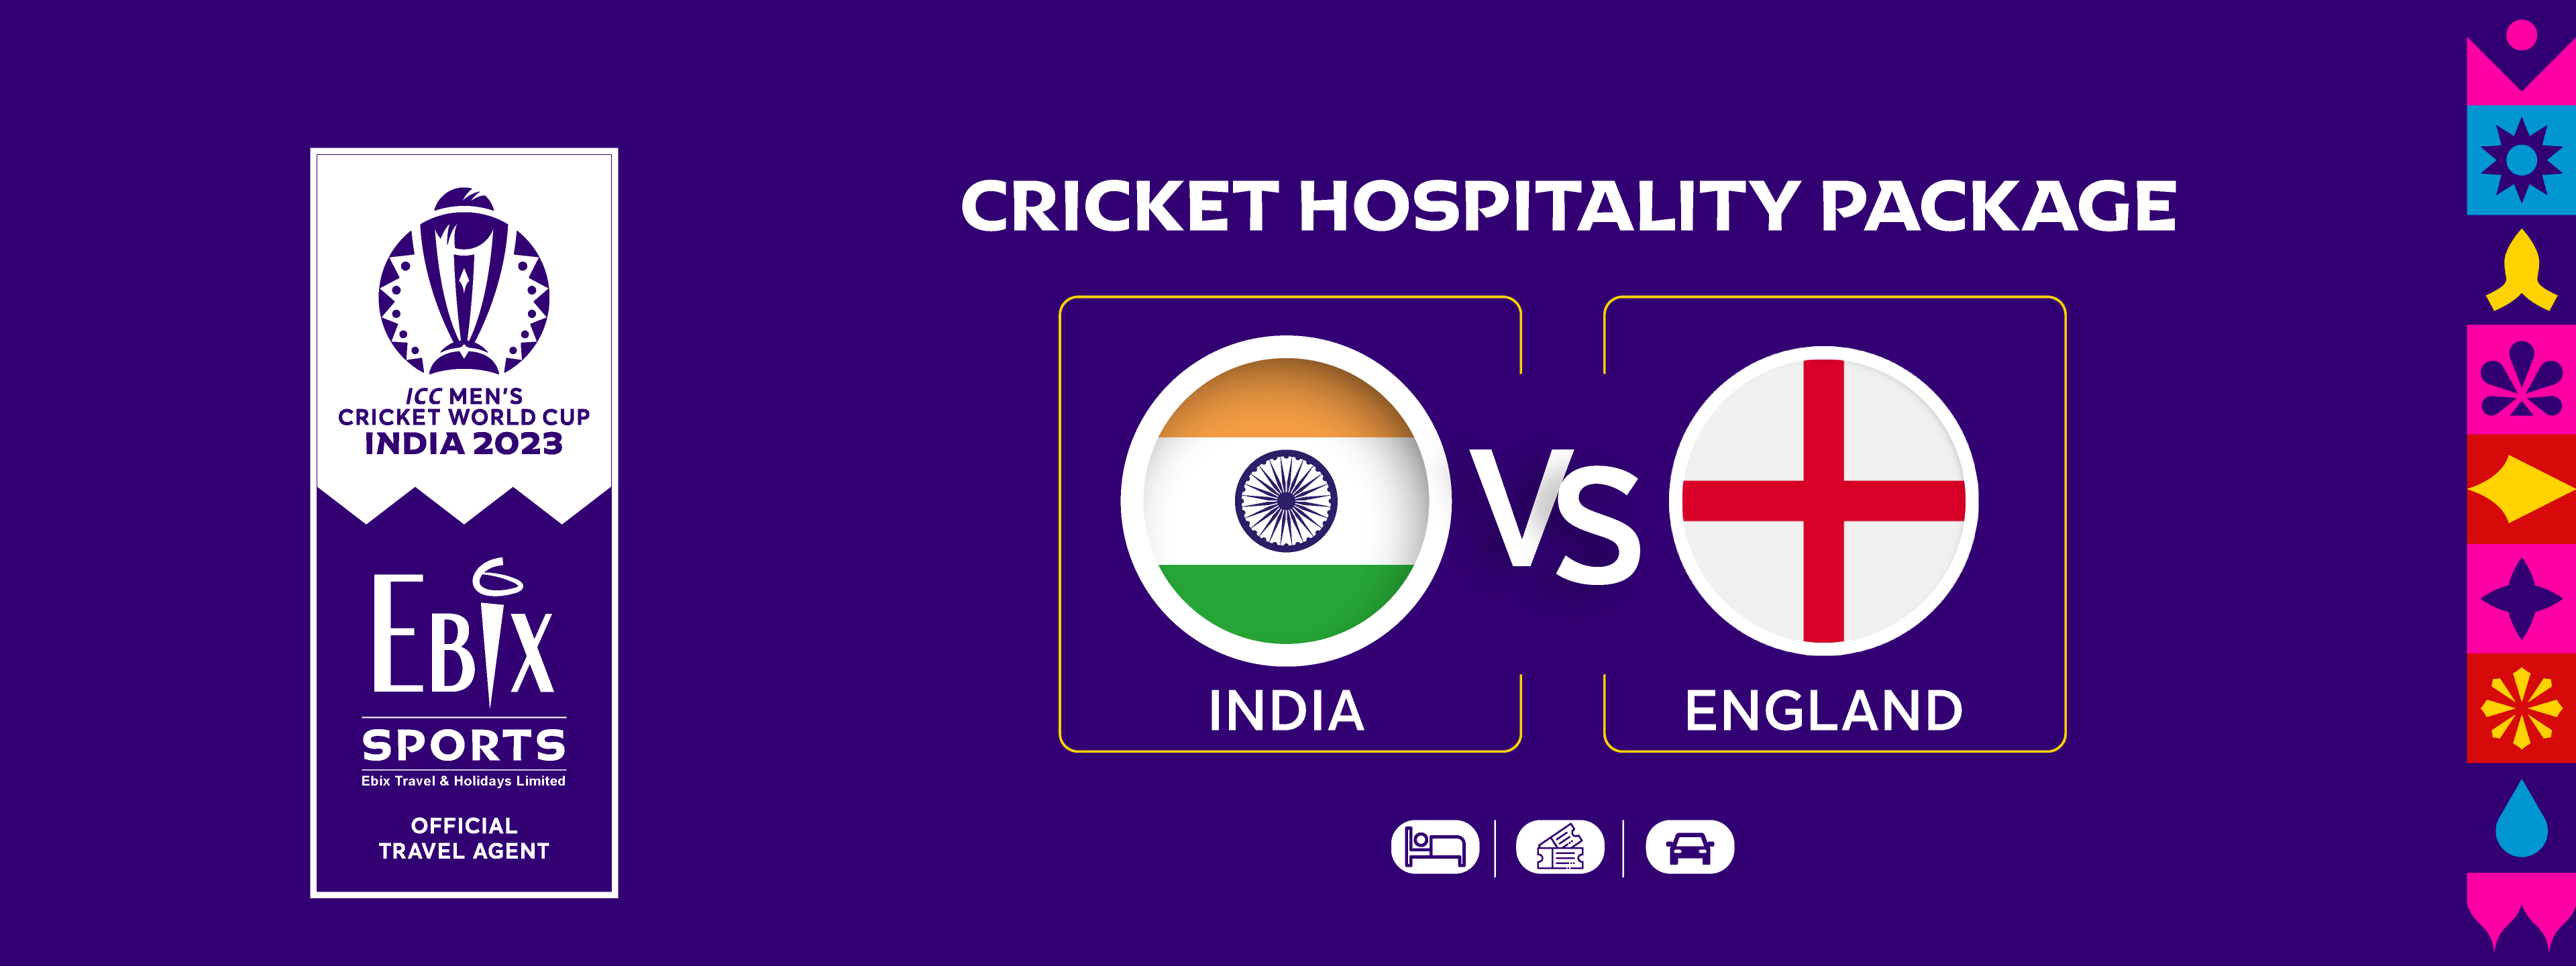 India v/s England